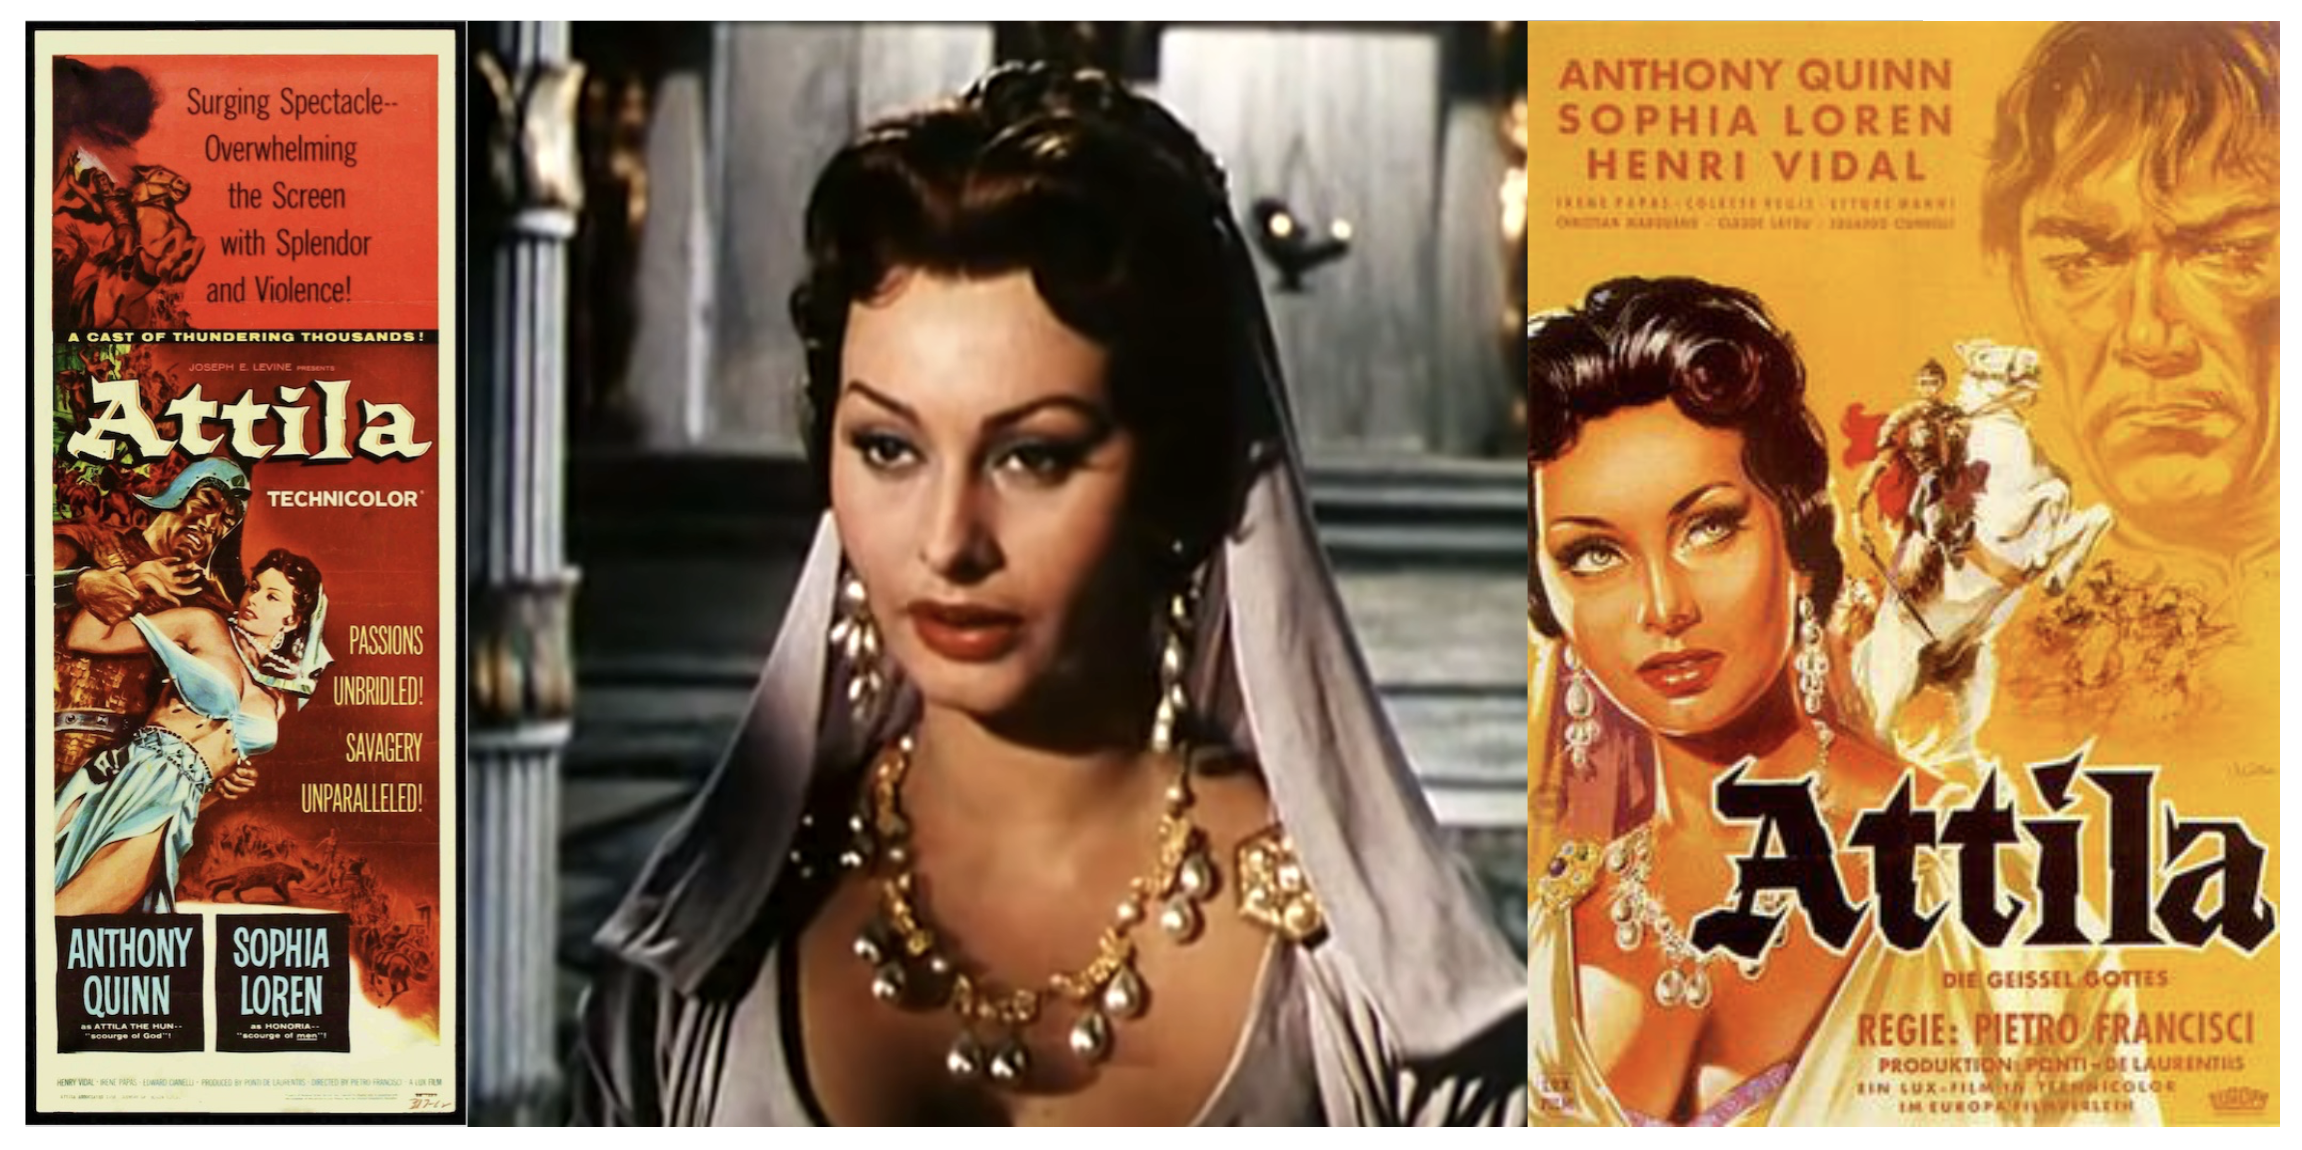 Justa Grata Honoria (418–455), known widely as Honoria, as portrayed by Sophia Loren in the 1954 blockbuster film Attila.